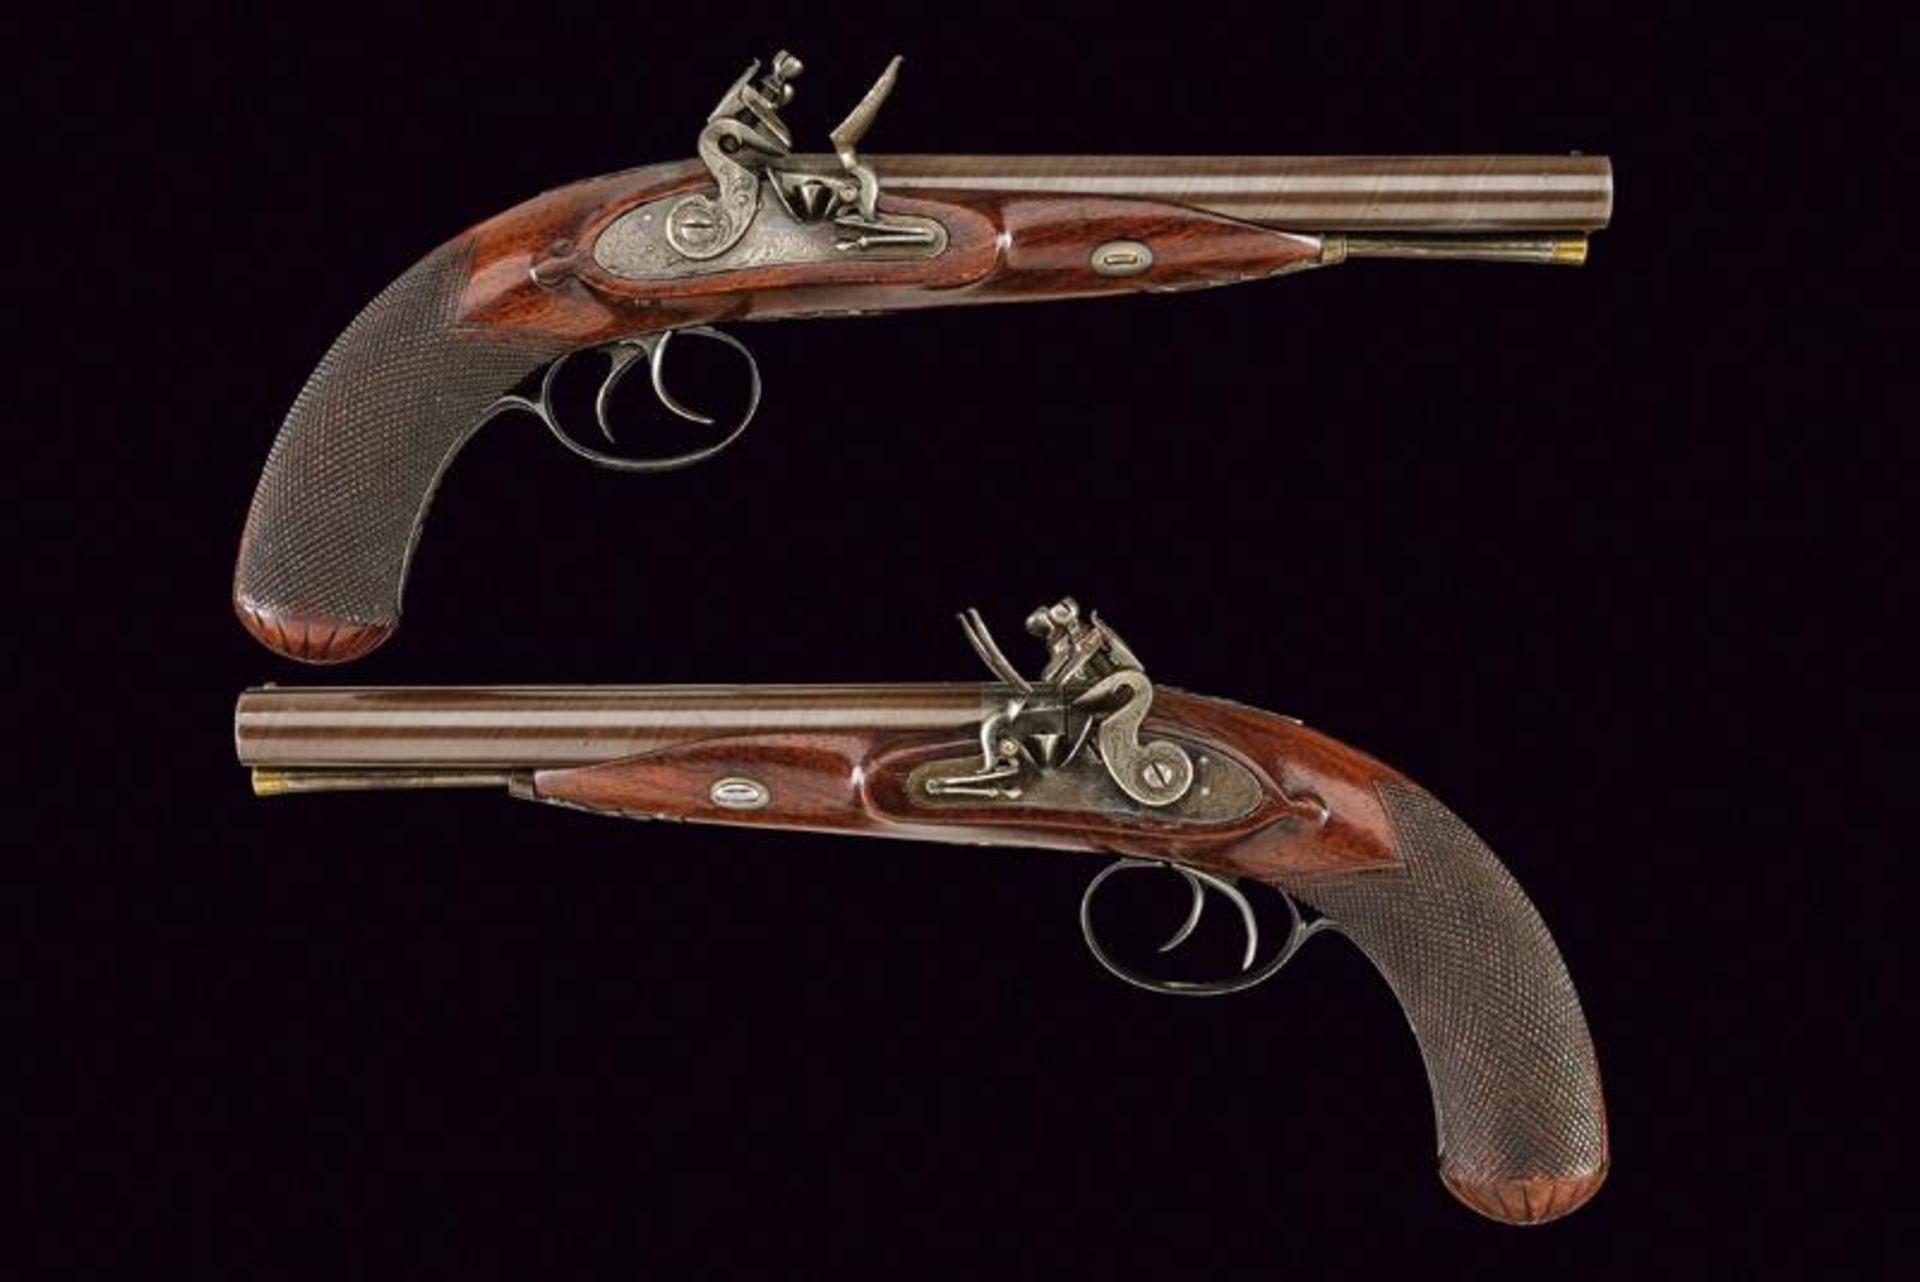 An interesting pair of double barreled flintlock pistols by Nock